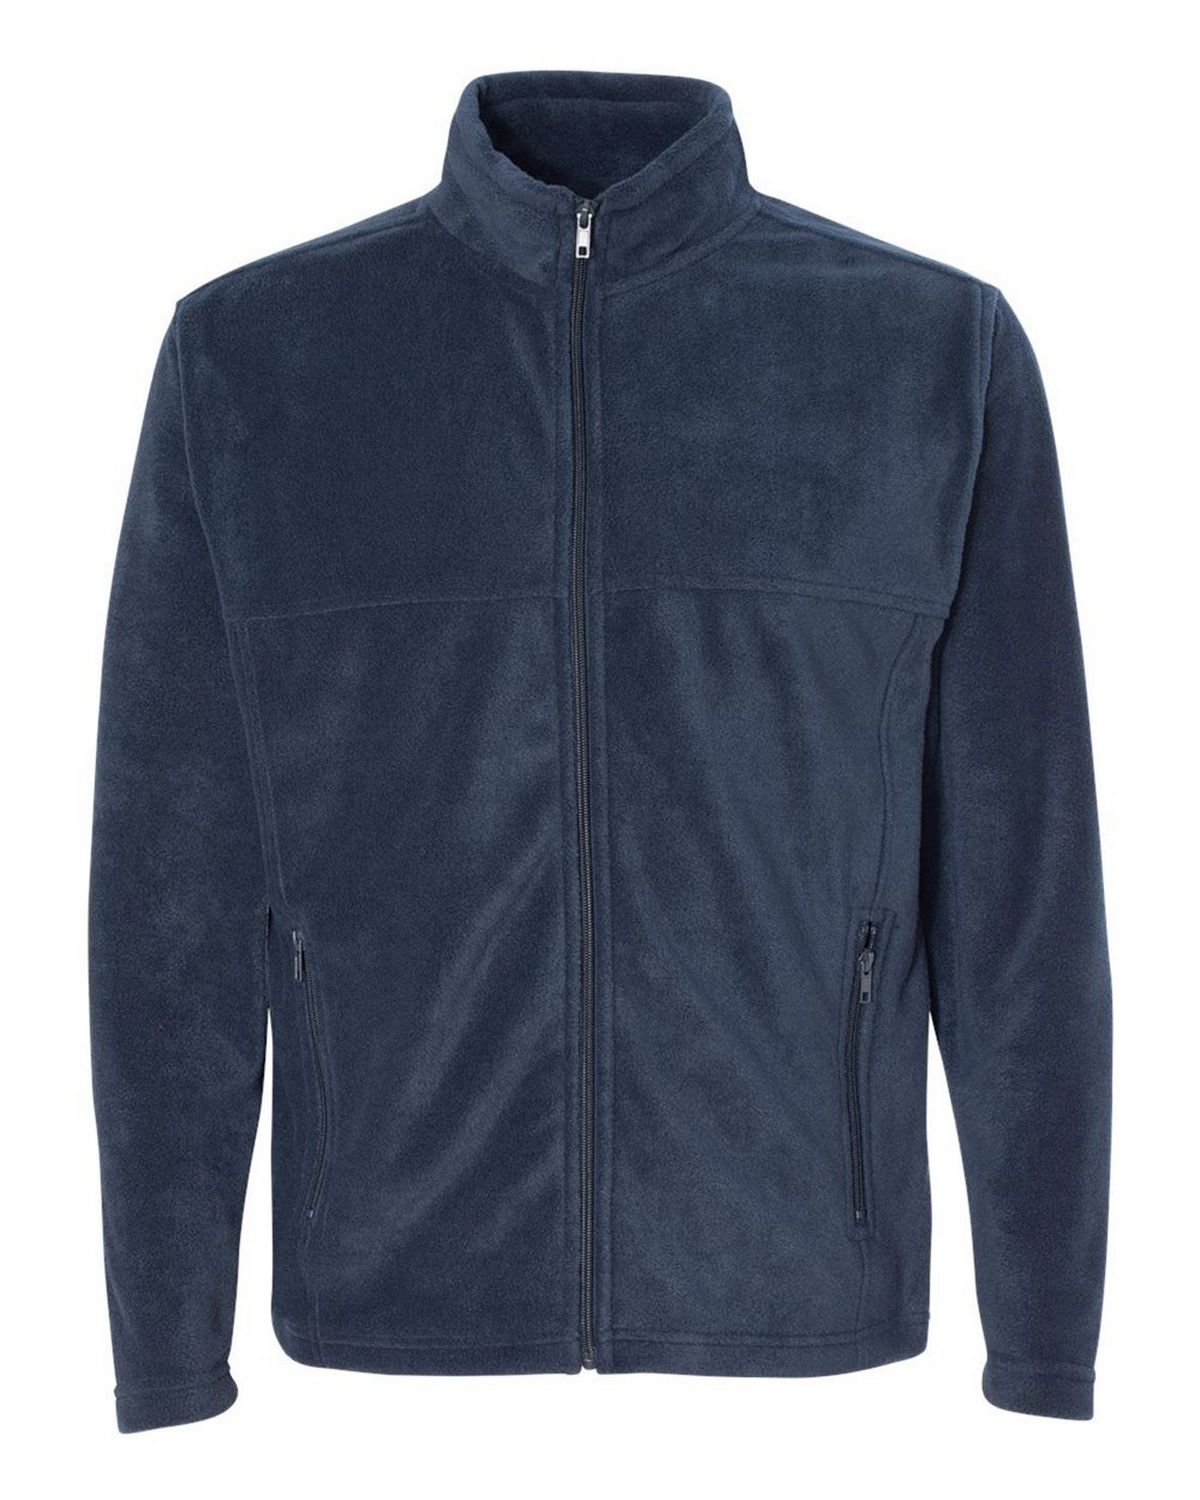 Colorado Clothing 9632 Mens Classic Sport Fleece Full-Zip Jacket